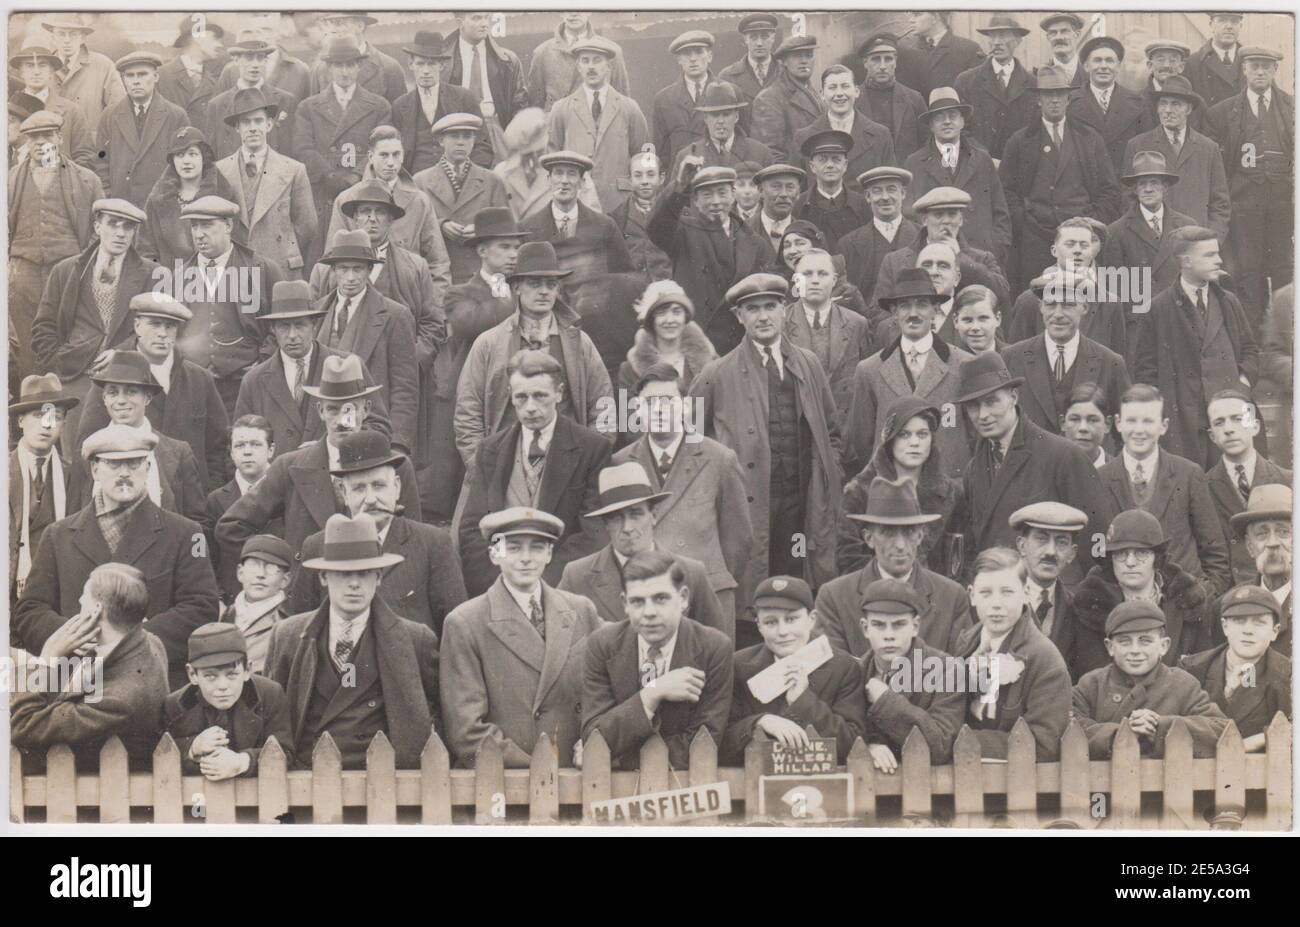 Football crowd at Brighton v Mansfield match, 1910s Stock Photo